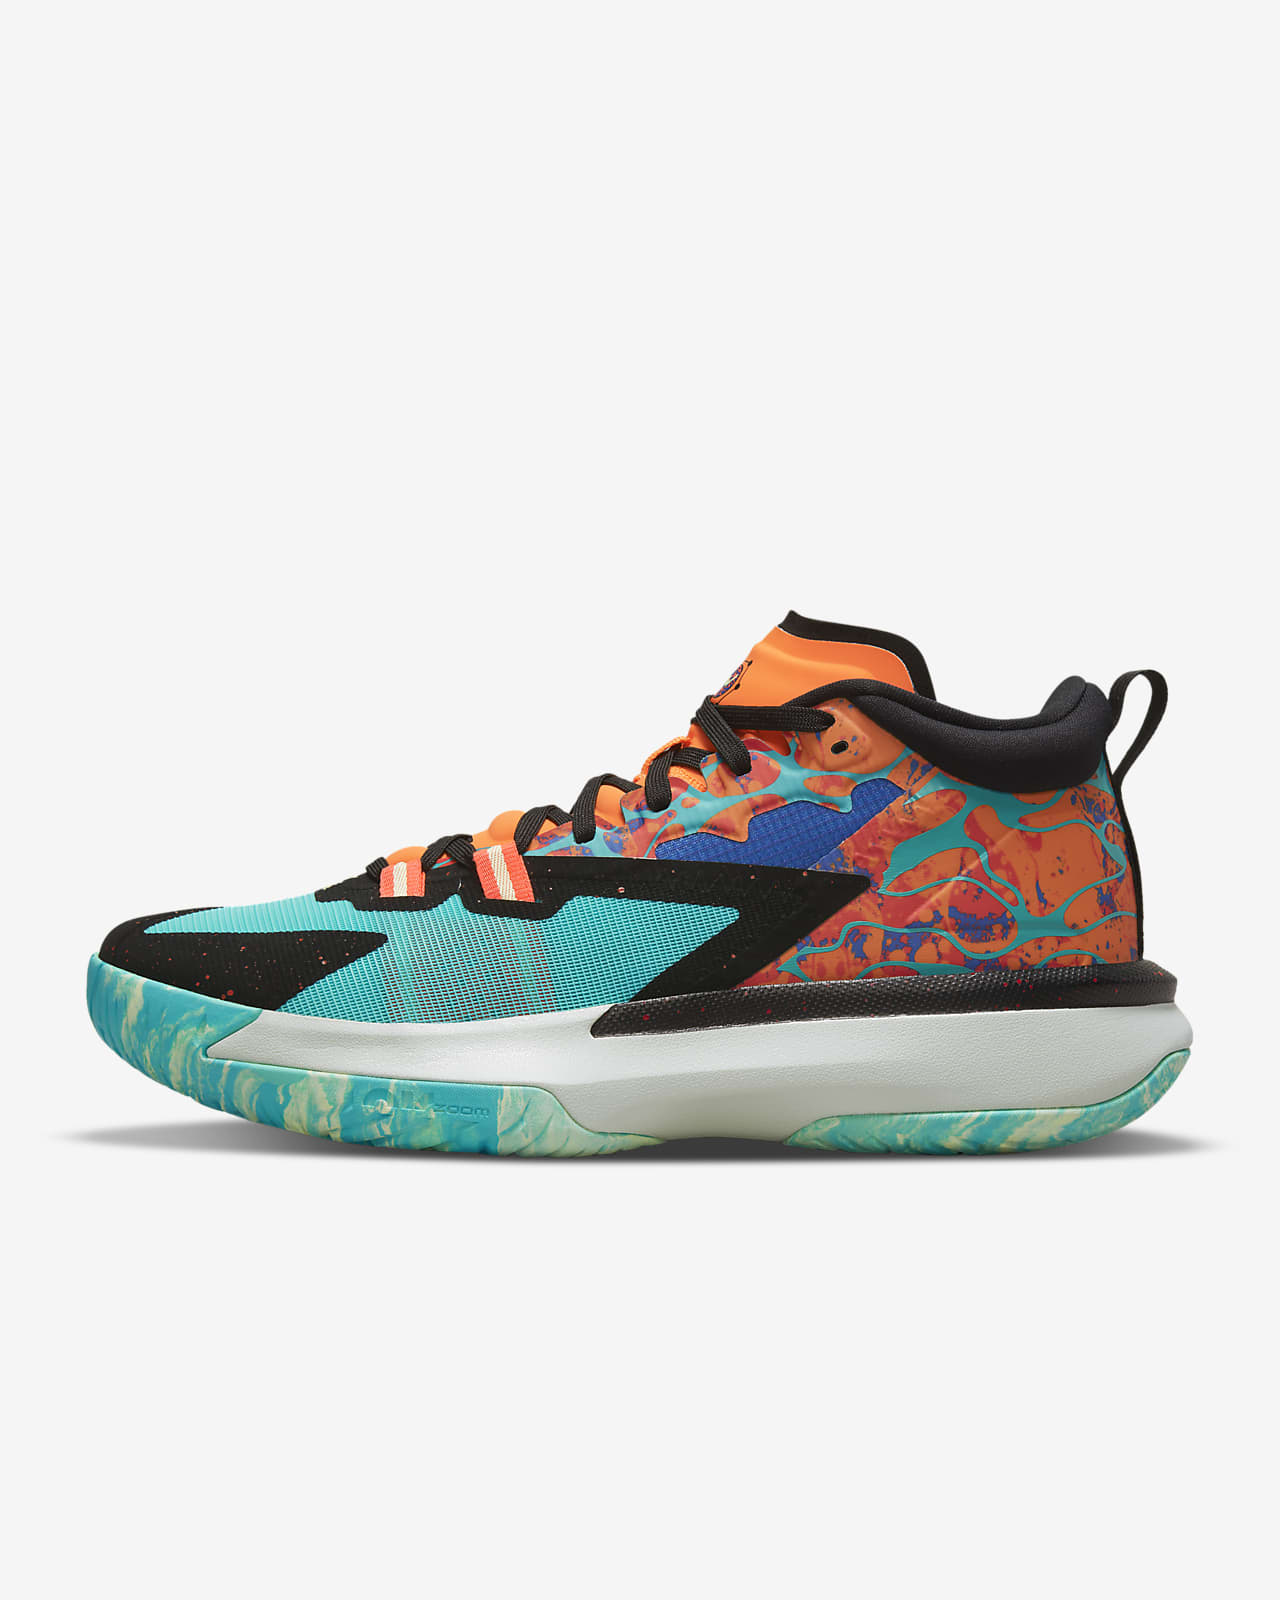 Zion 1 PF Basketball Shoes